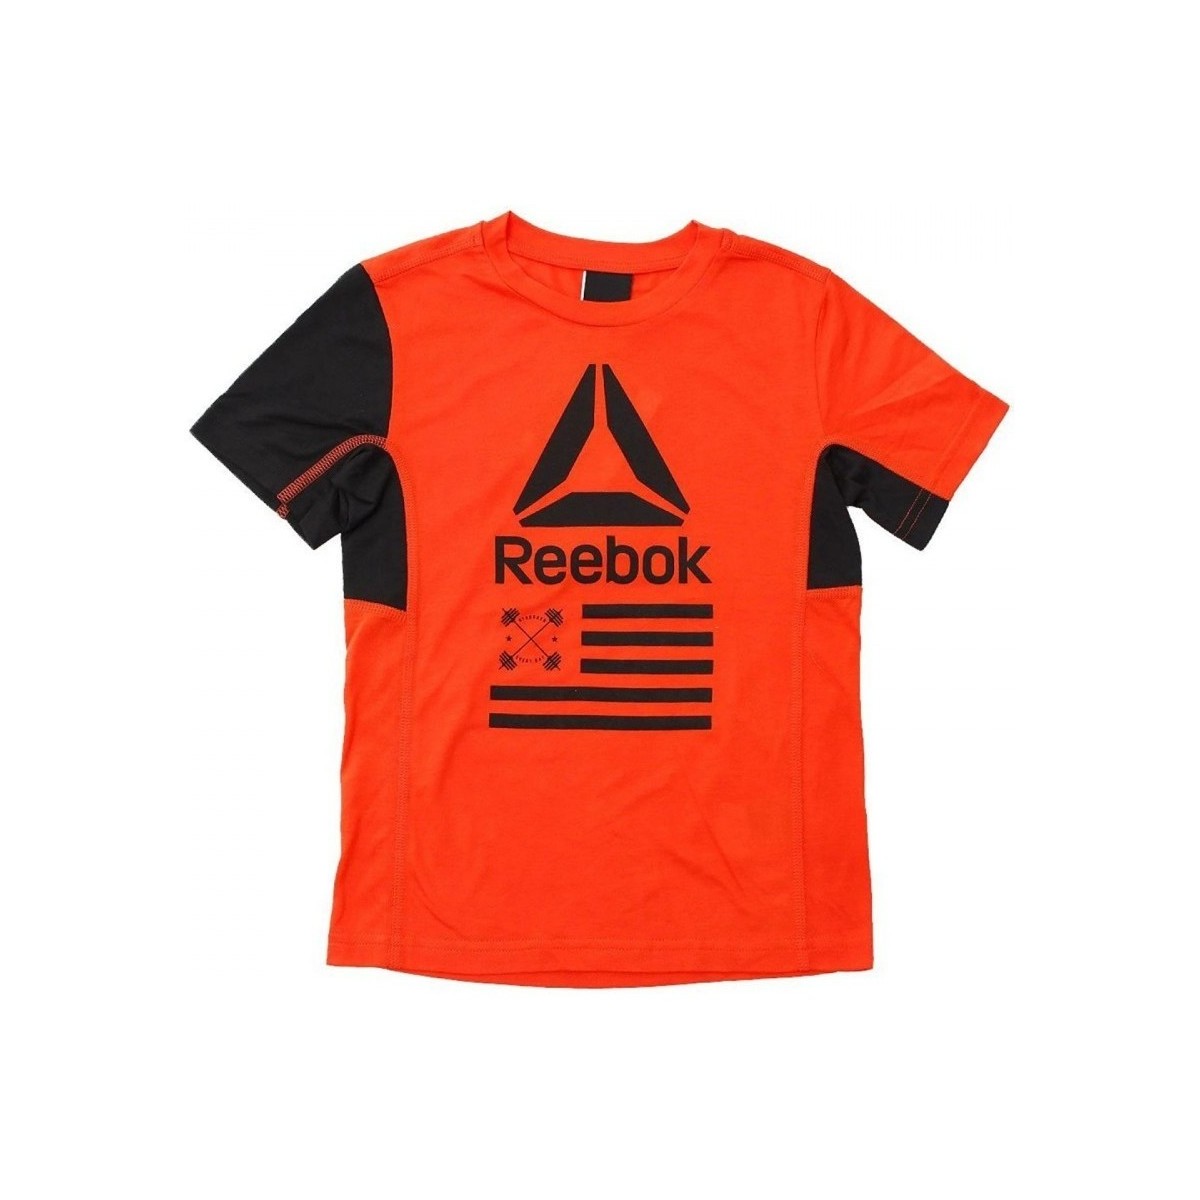 Vêtements Garçon T-shirts manches courtes Reebok Sport B Ftr Tee Orange